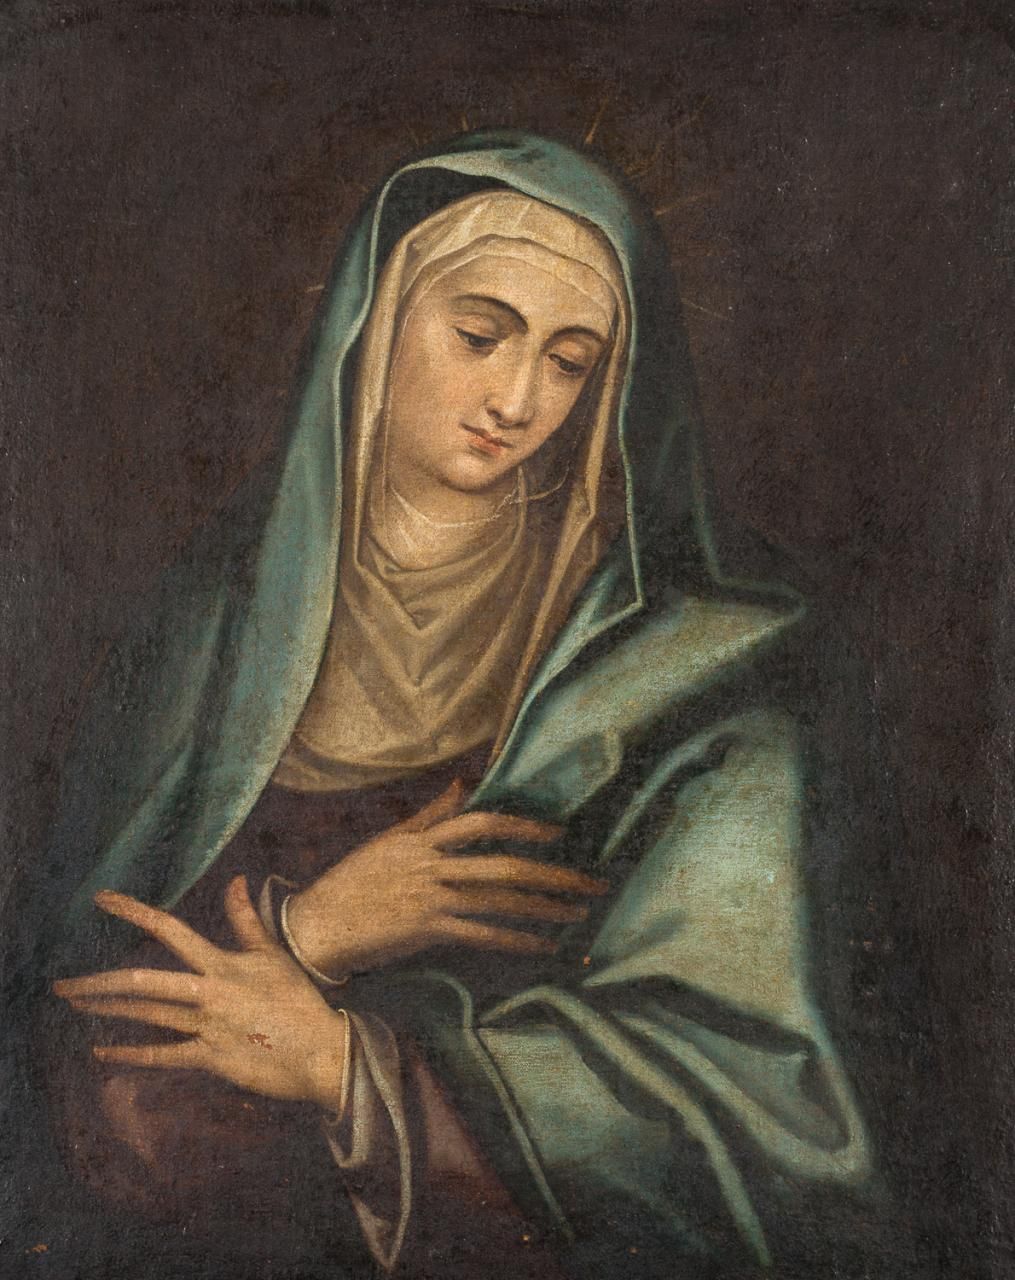 ESCUELA ESPAÑOLA, Fns. S. XVII La Madonna Addolorata
Olio su tela
91 x 76 cm